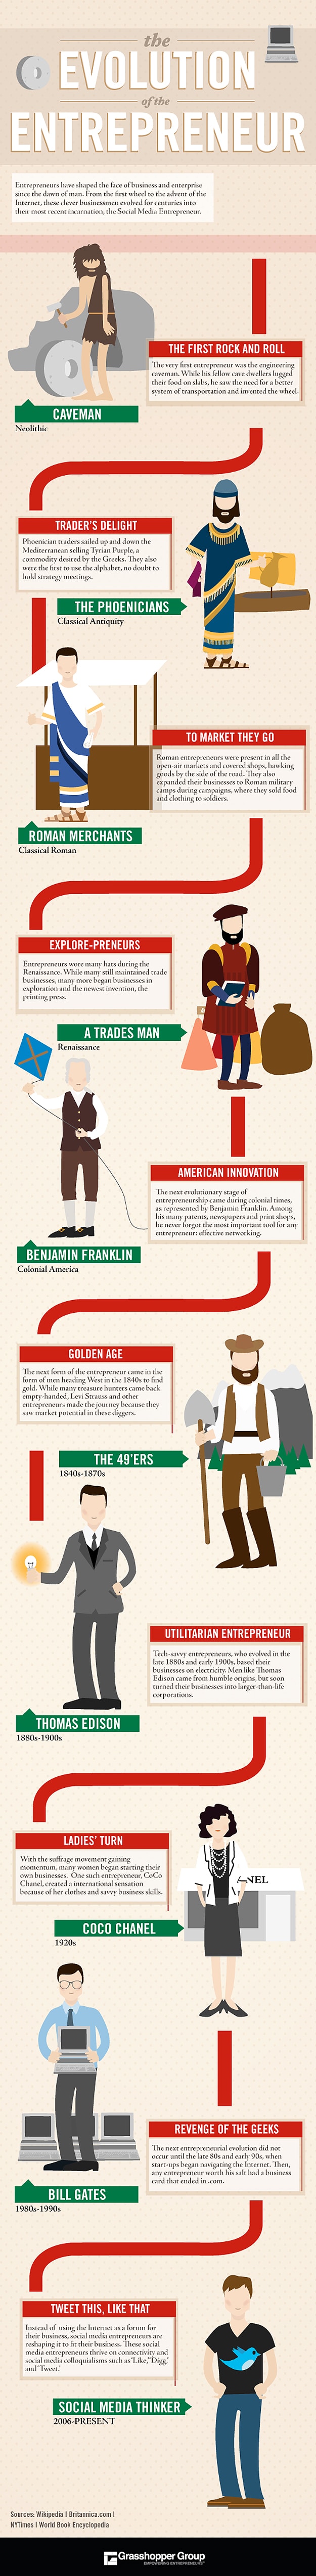 The Evolution Of The Entrepreneur [Infographic]